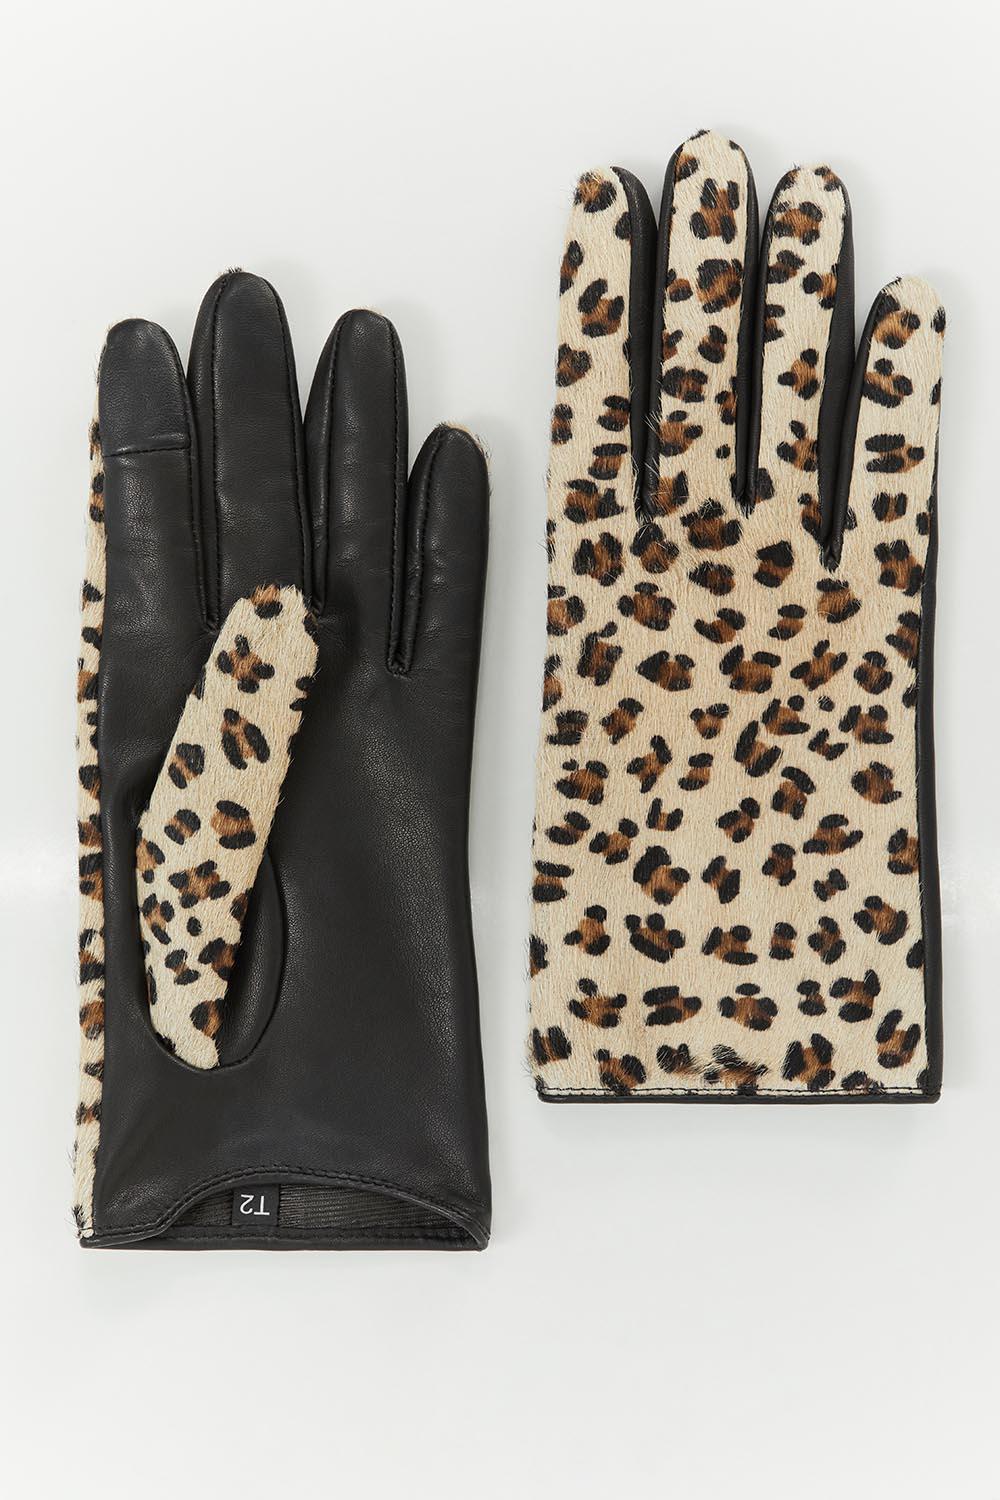 ASTRIO - Gants noirs en cuir certifié LWG Gold avec motif léopard